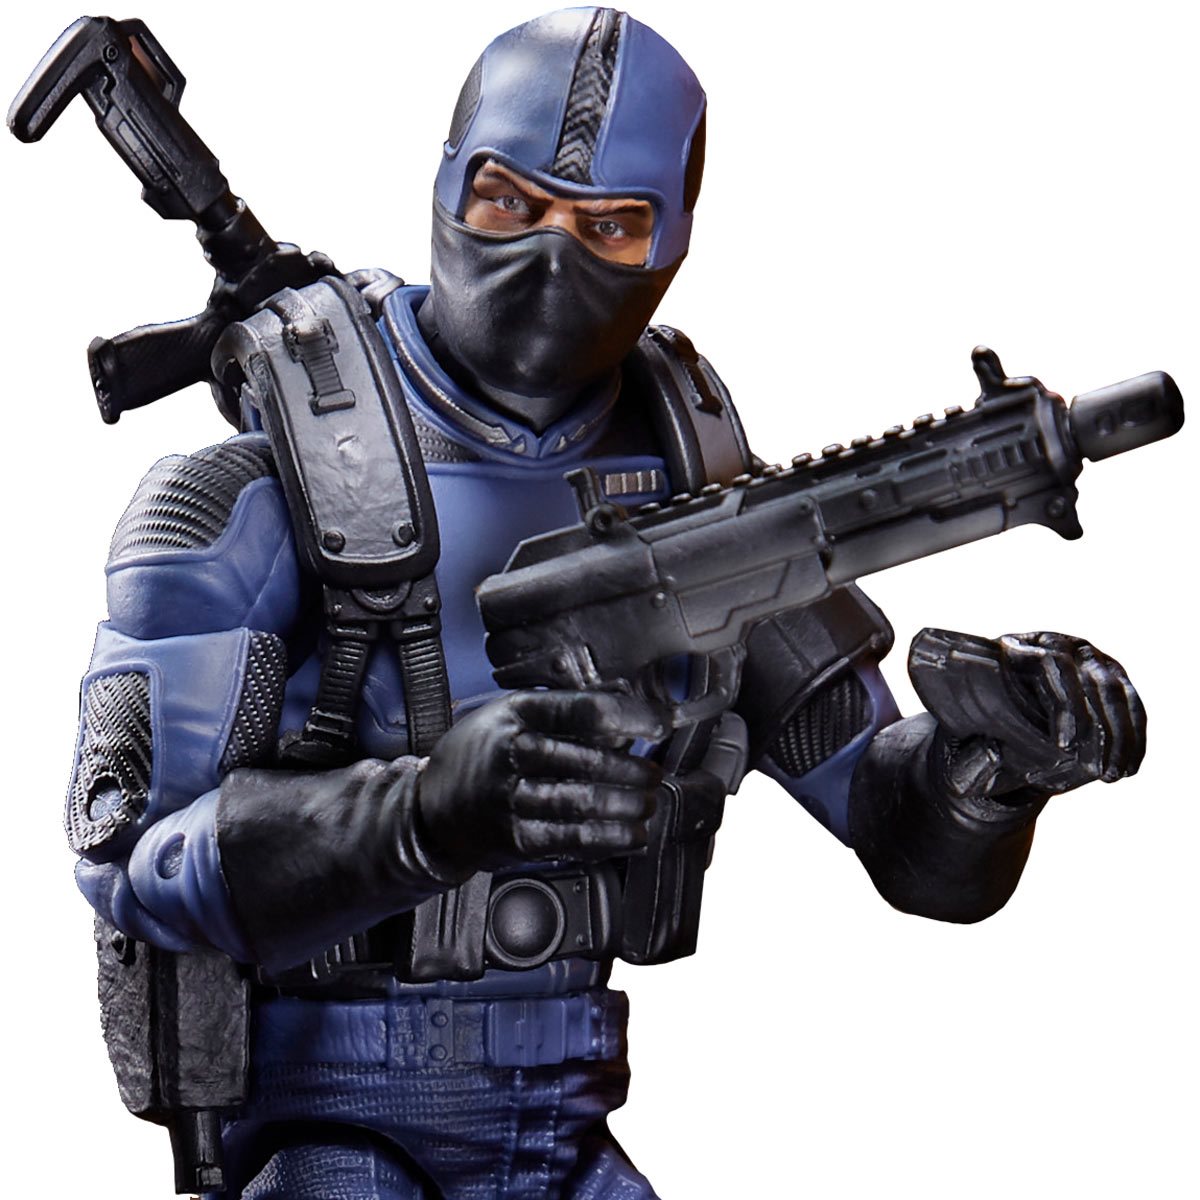 Joe Classified Series Hasbro G.I Cobra Trooper Action Figure for sale online